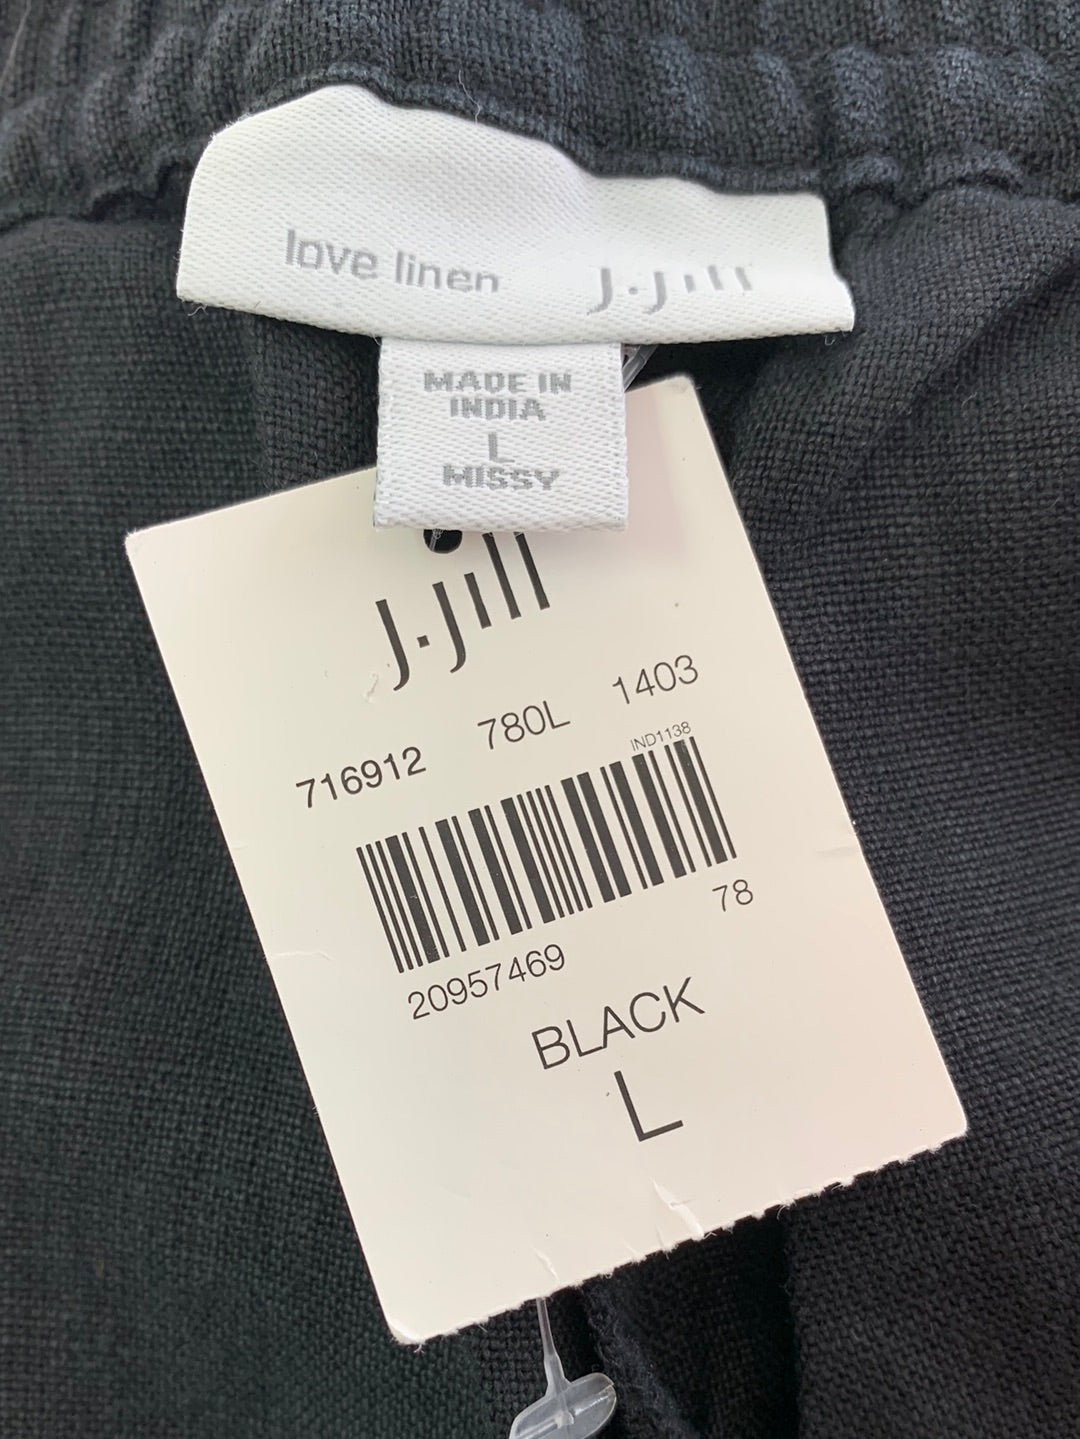 NWT - J. JILL Love Linen black Pull-on Elastic Waist Pants - Large